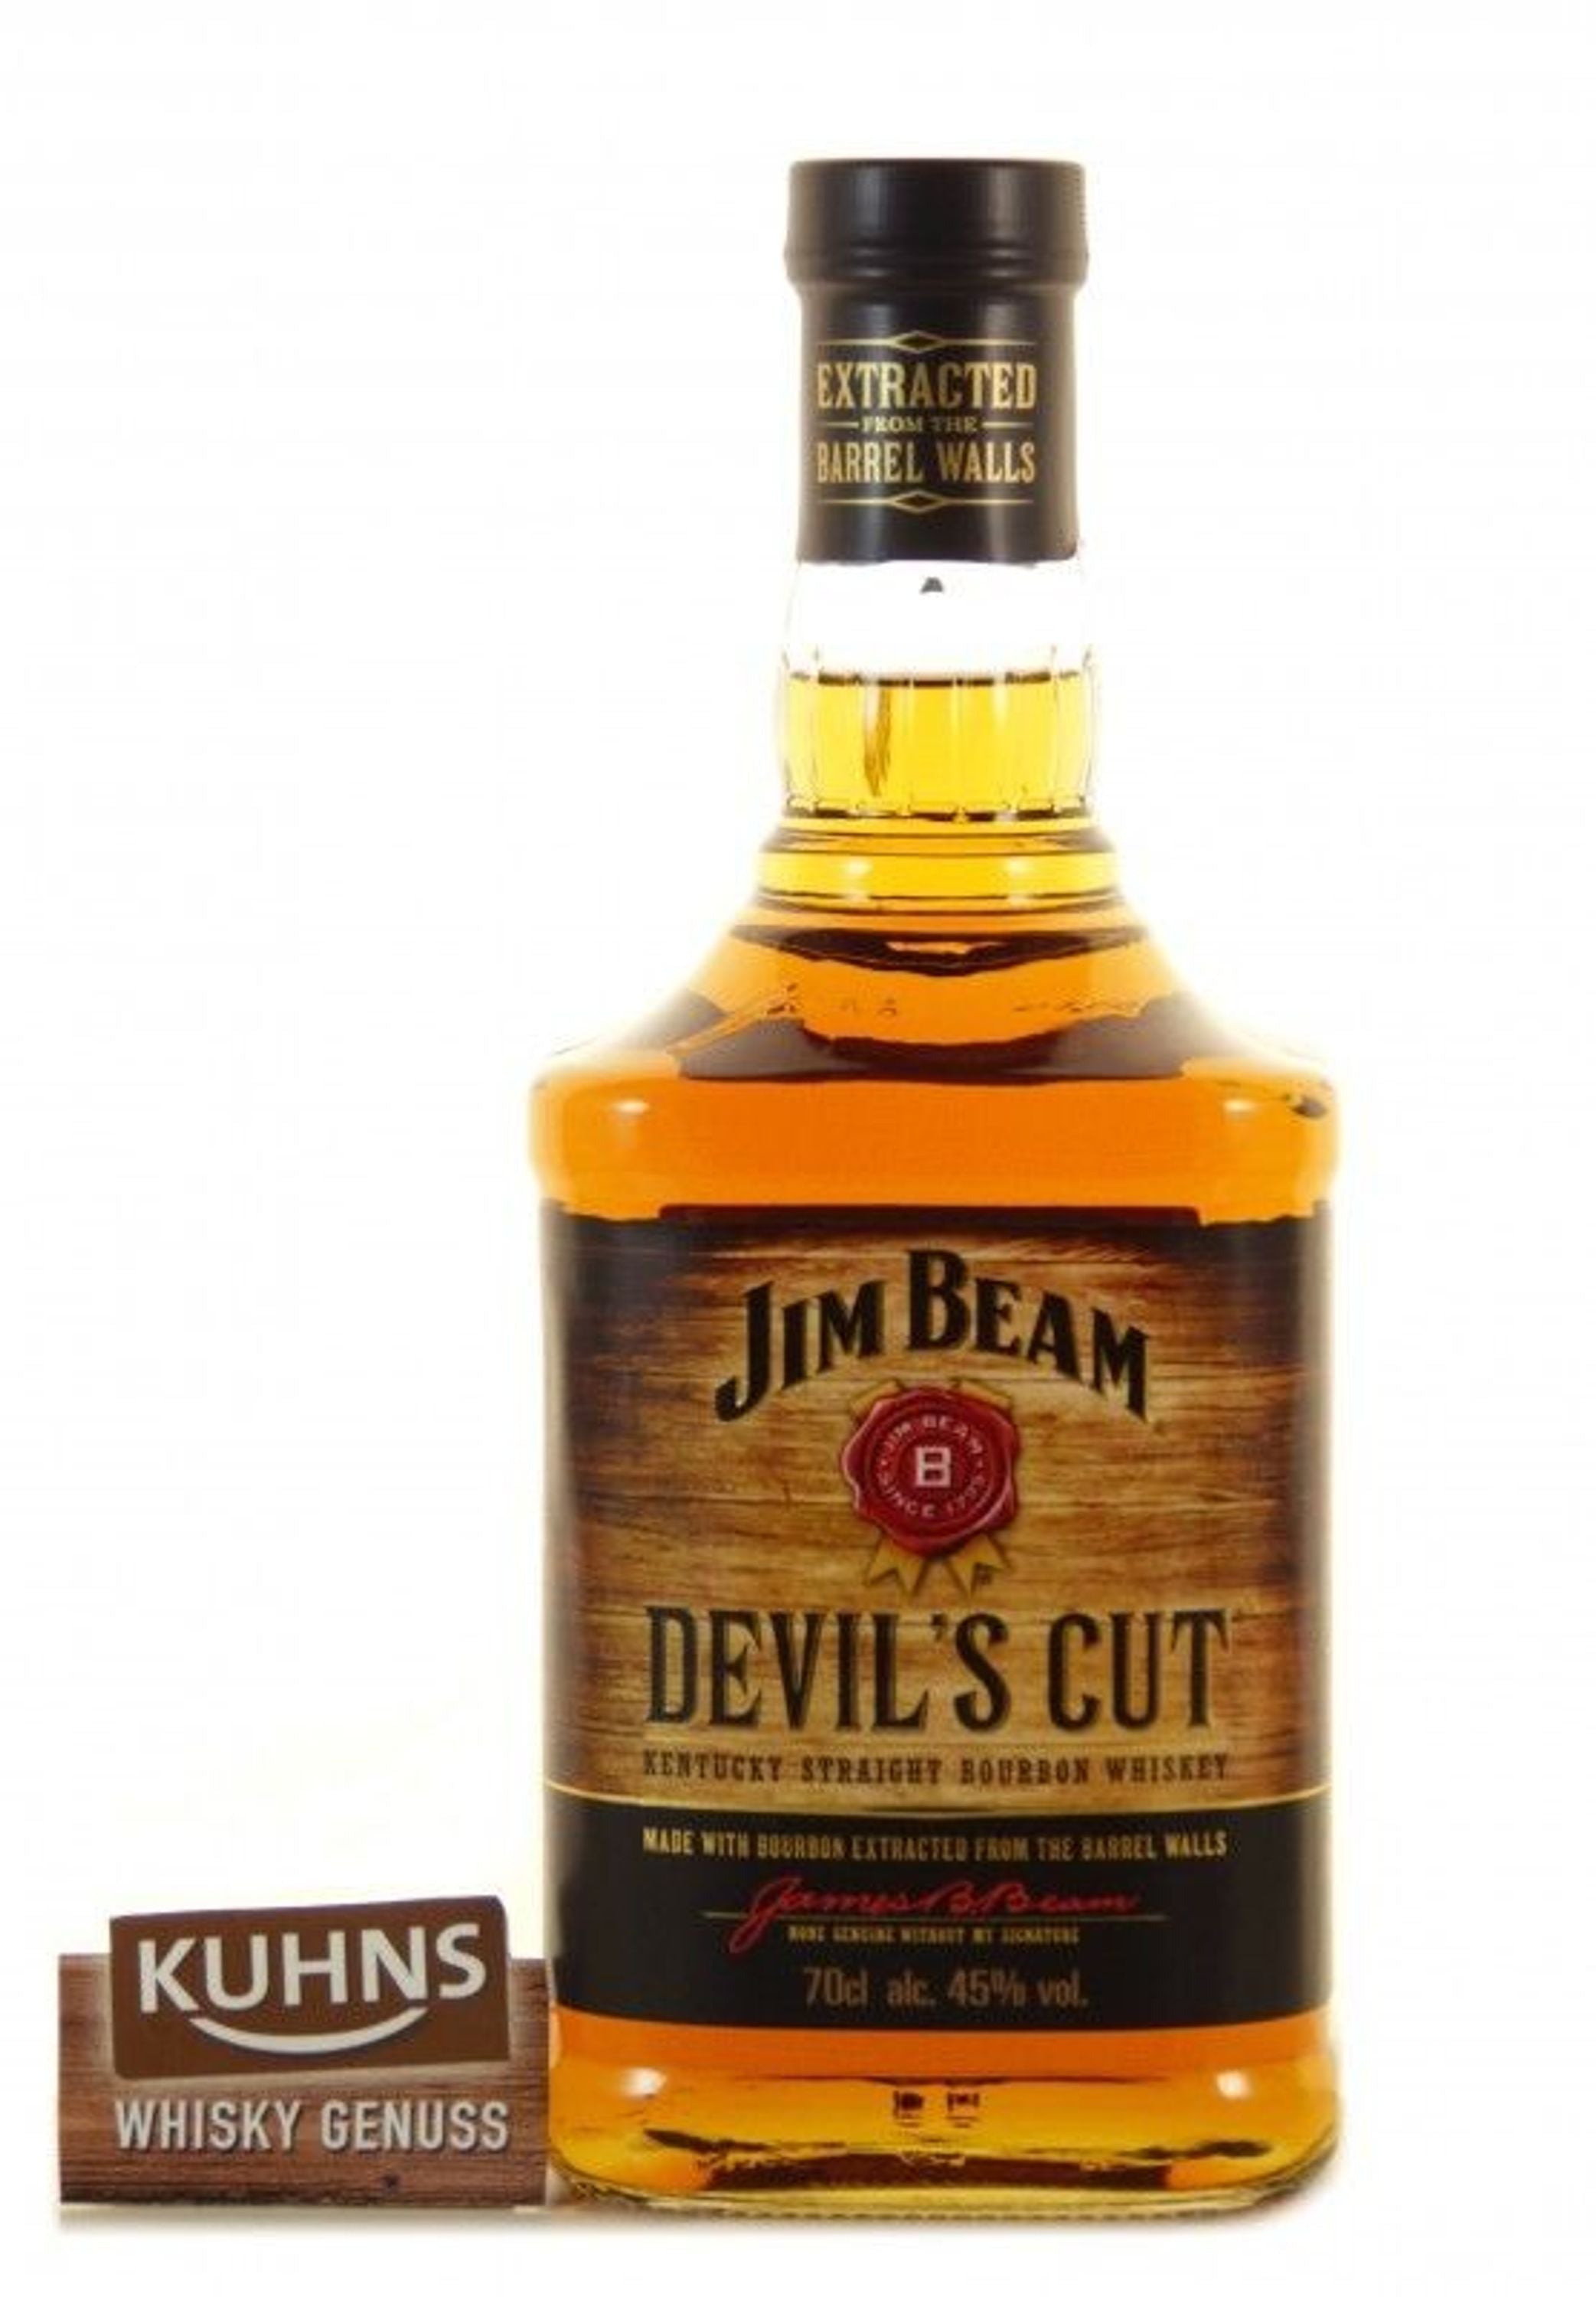 Jim Beam Devil's Cut Kentucky Straight Bourbon Whiskey 0.7l, alc. 45% by volume